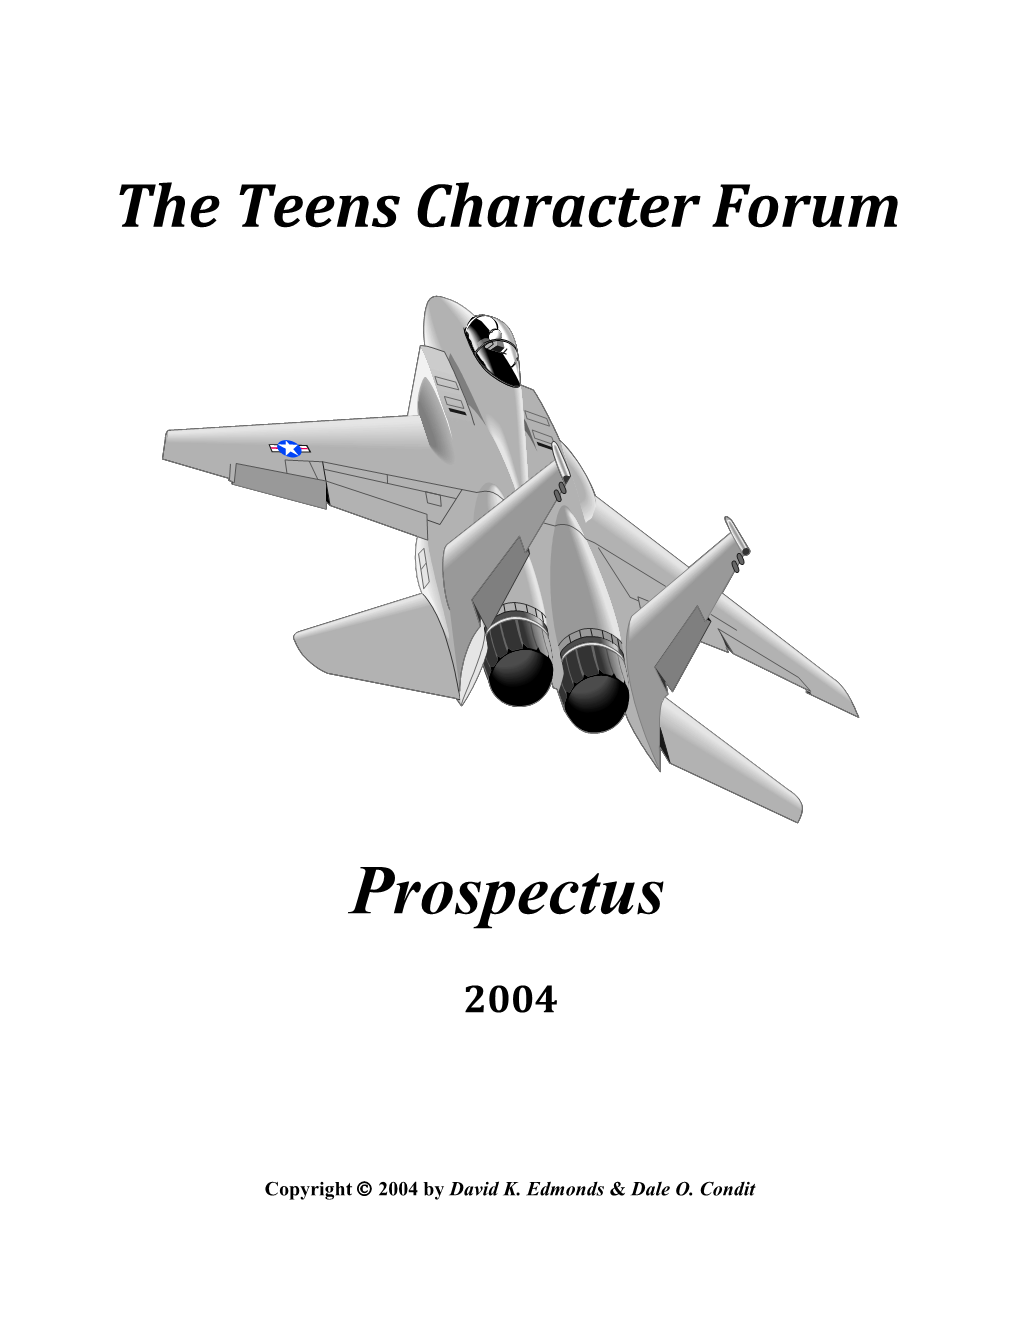 The Teens Leadership Forum